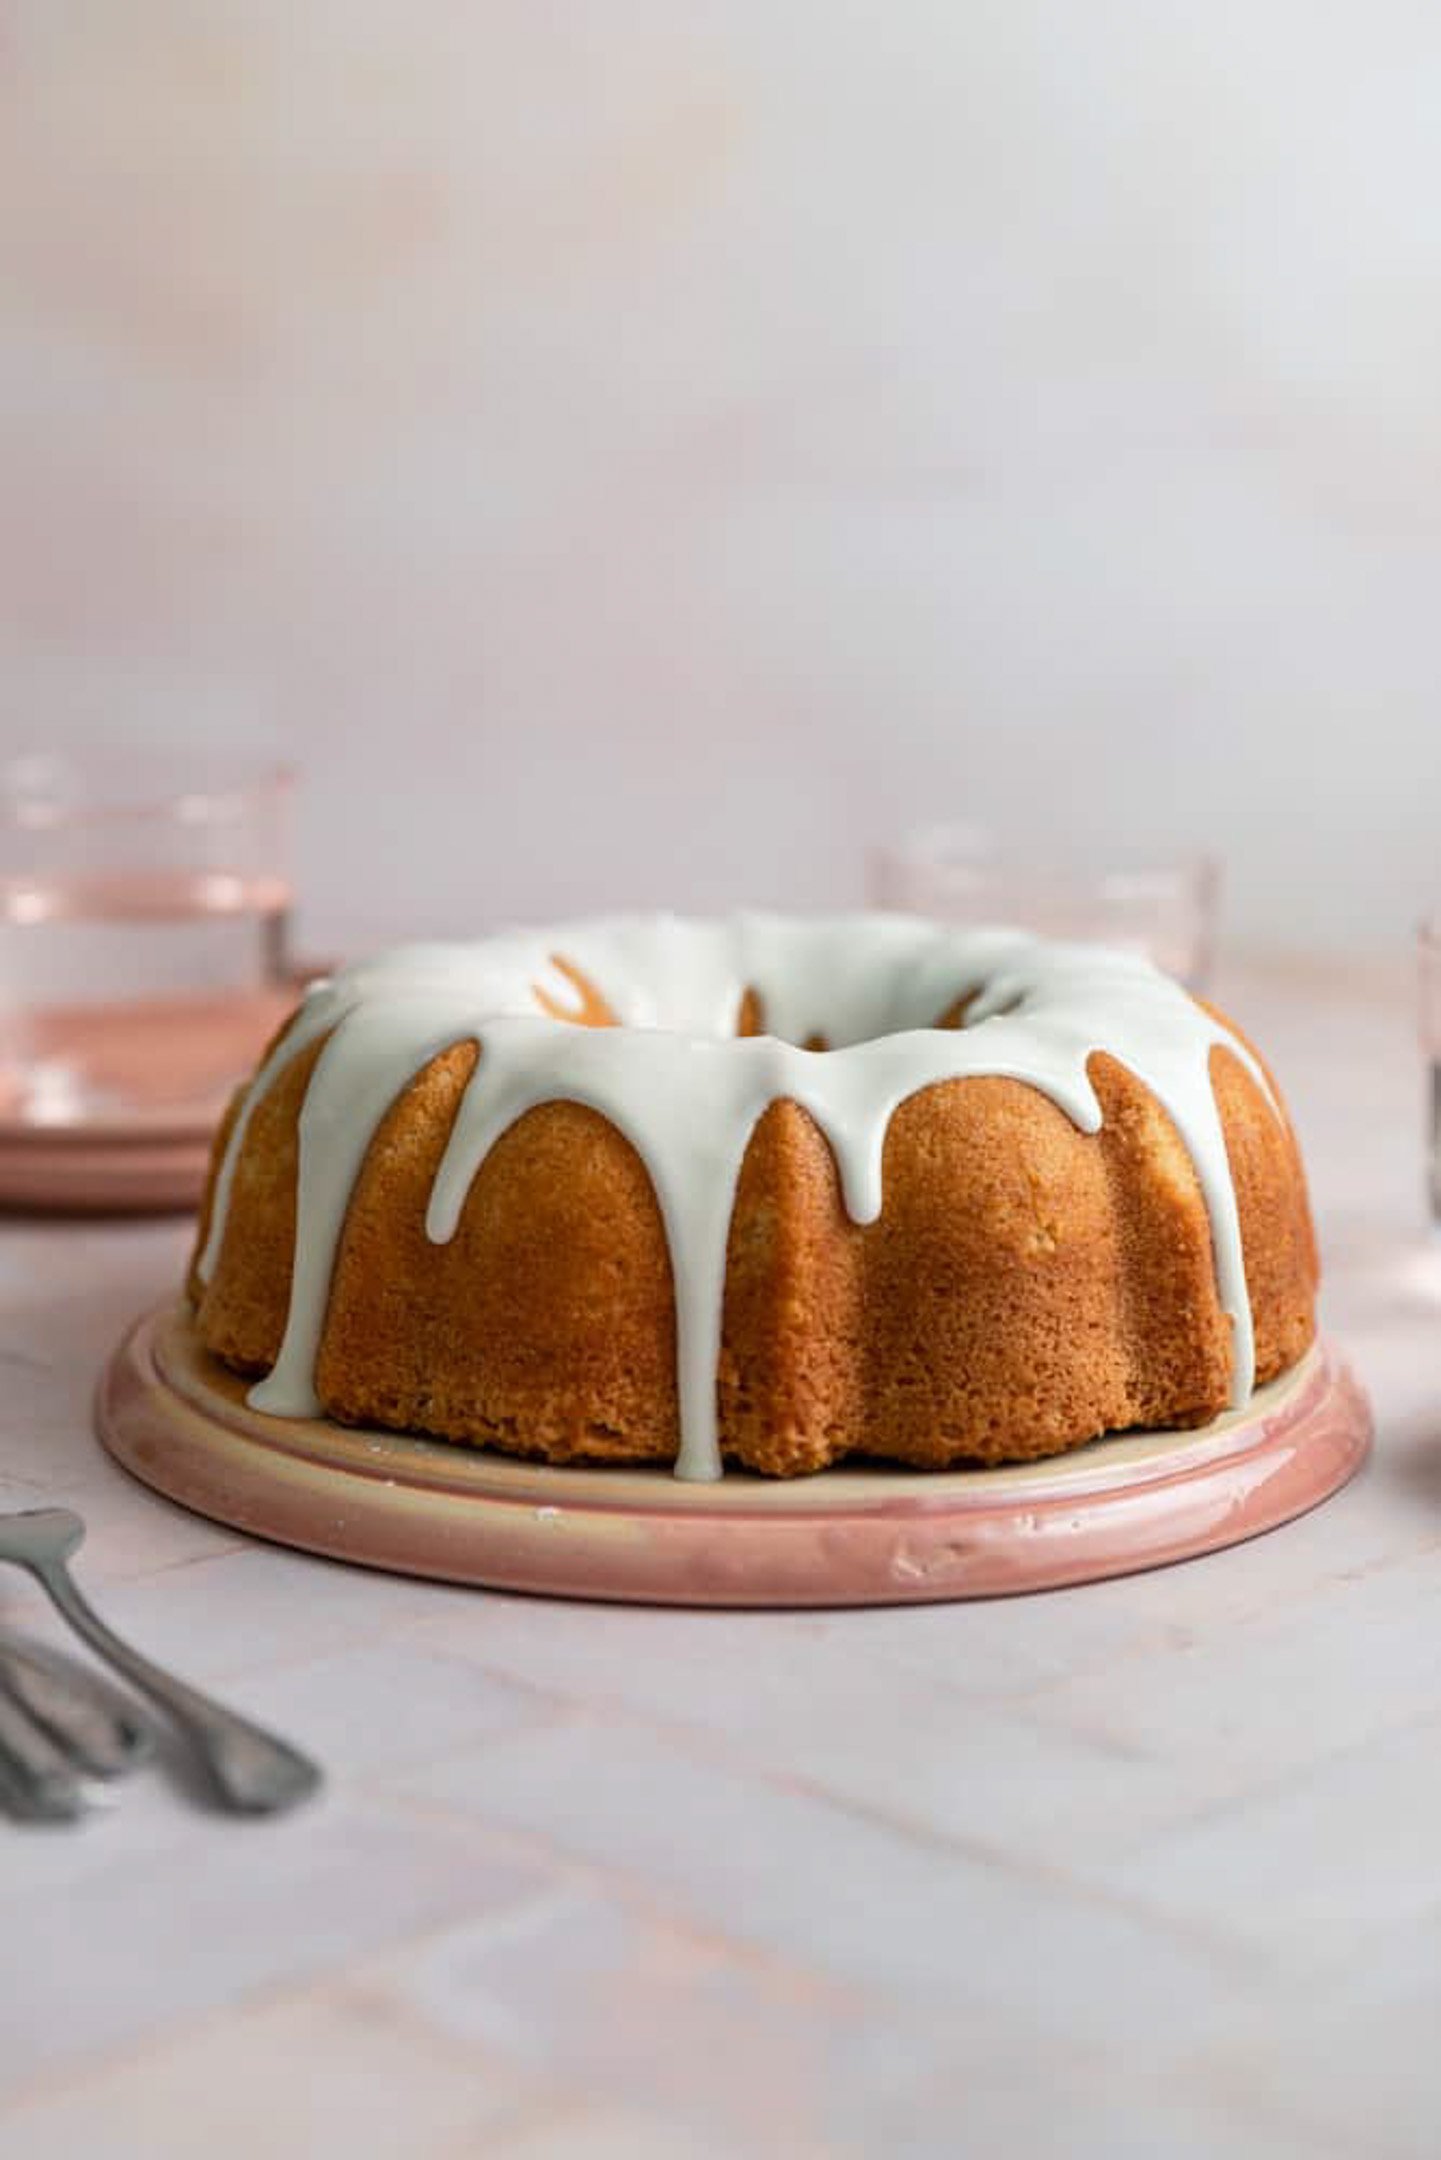 A vanilla bundt cake with a white glaze on top.